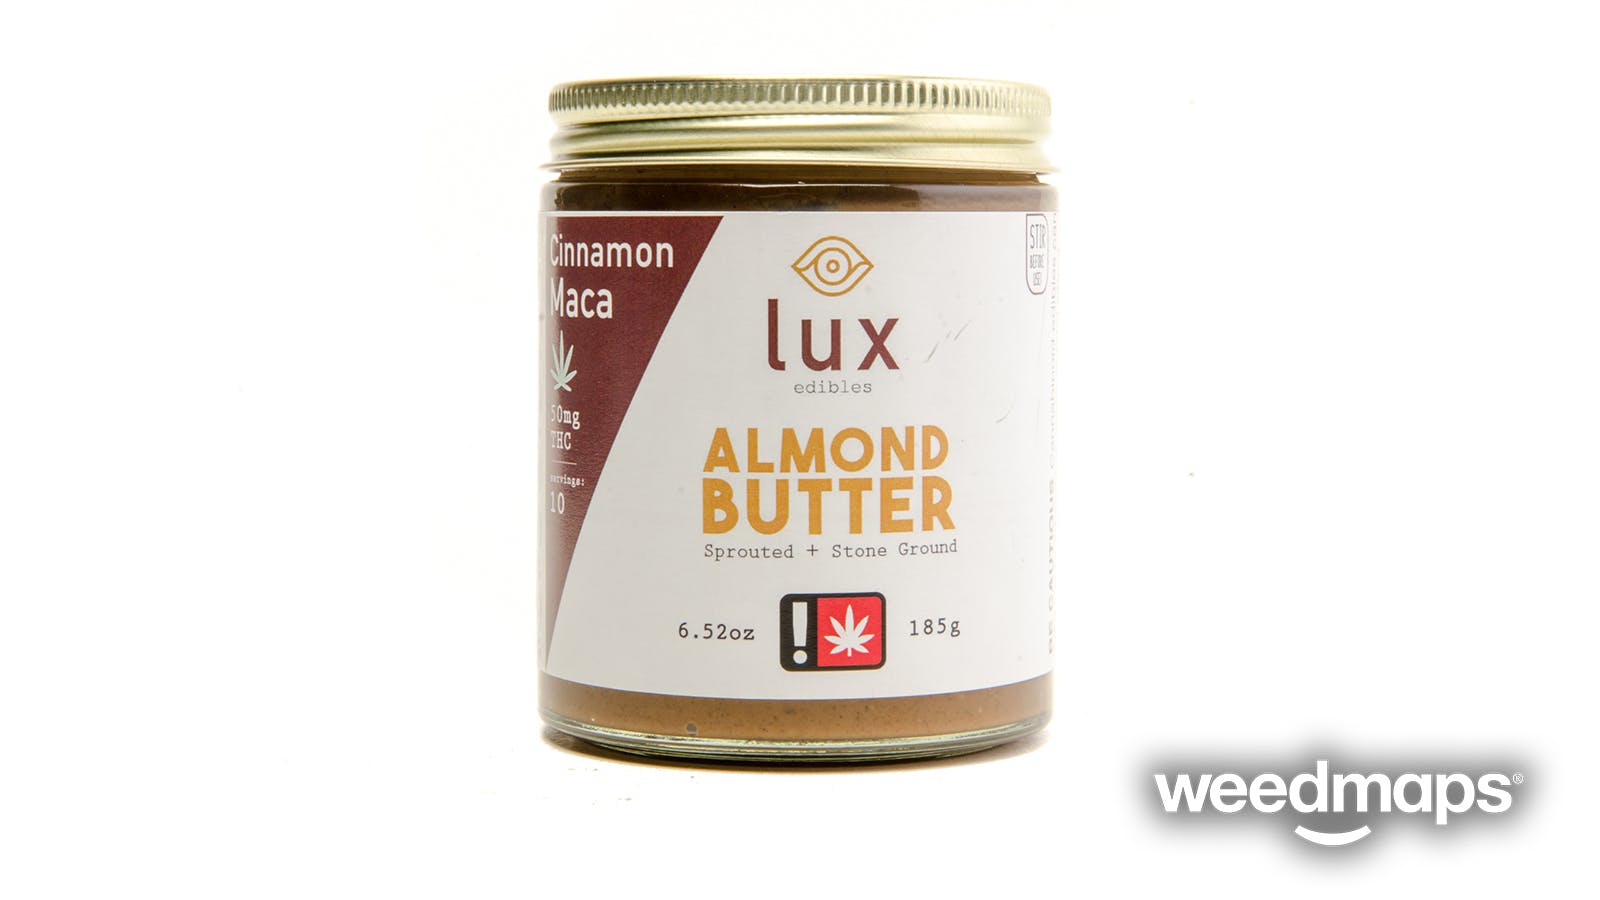 edible-almond-butter-cinnamon-maca-lux-edibles-6-52oz-jar